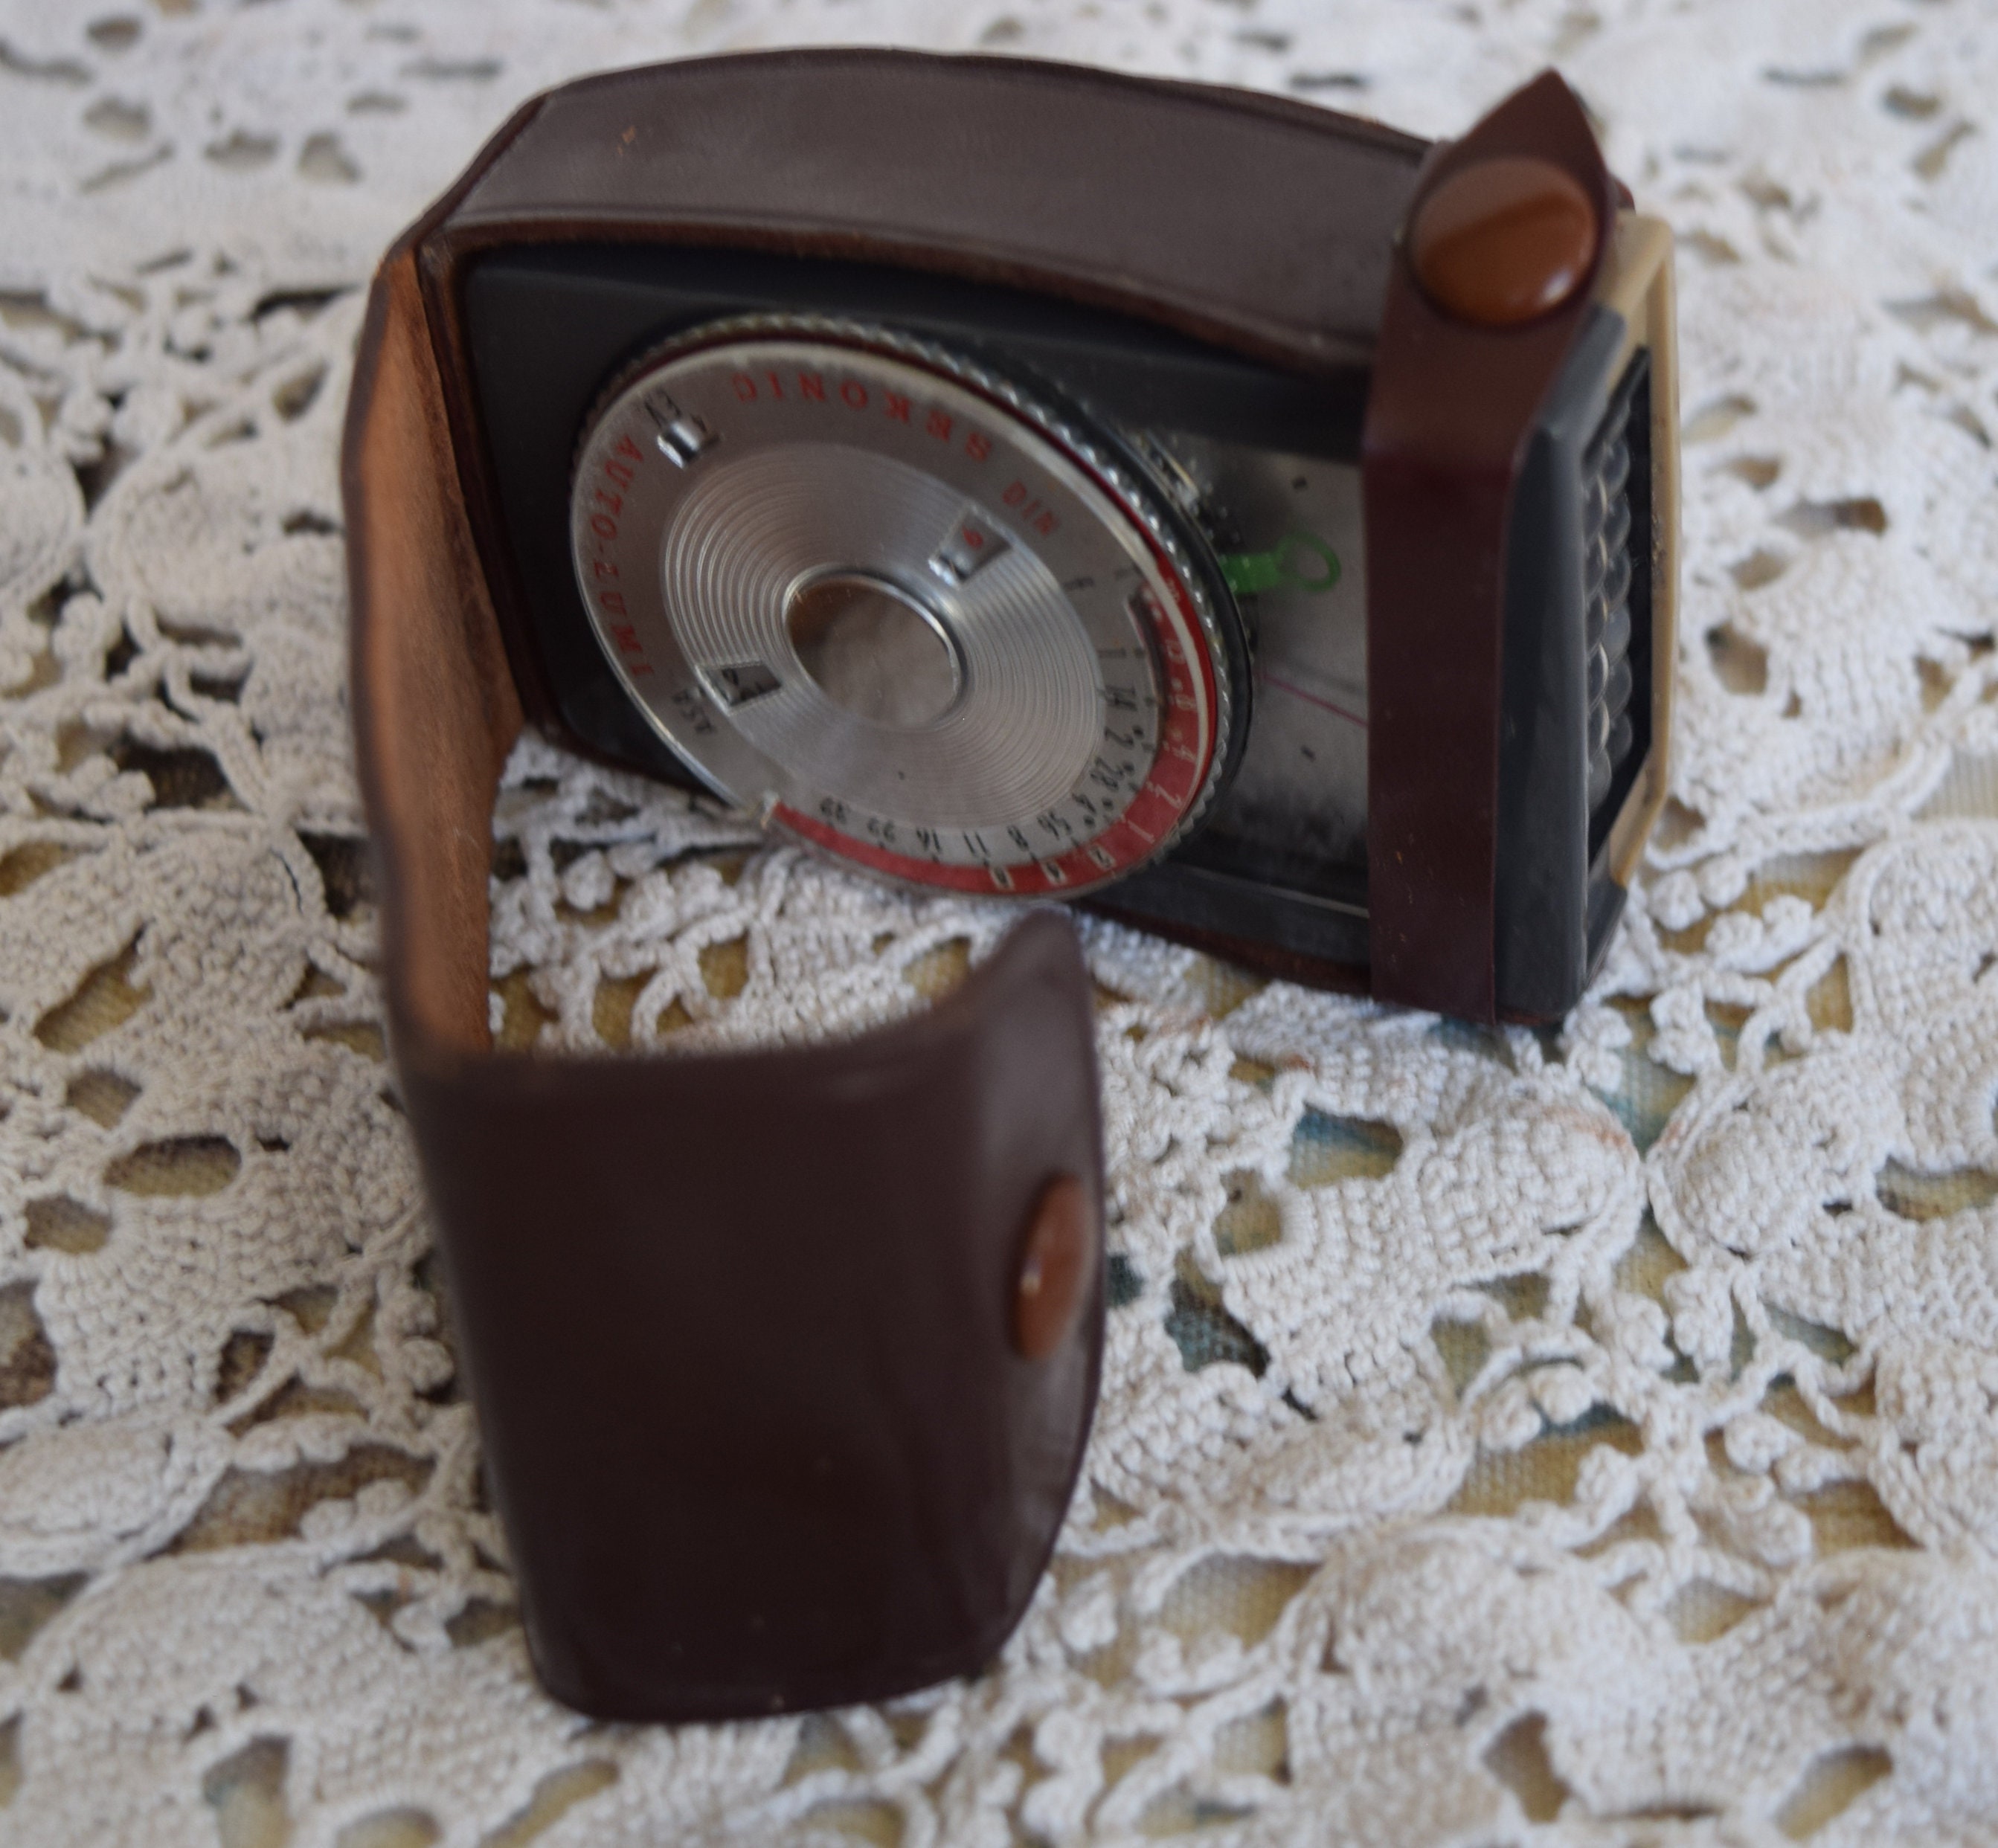 Vintage Sekonic auto-Lumi model L-86 exposure meter in original hard leather case